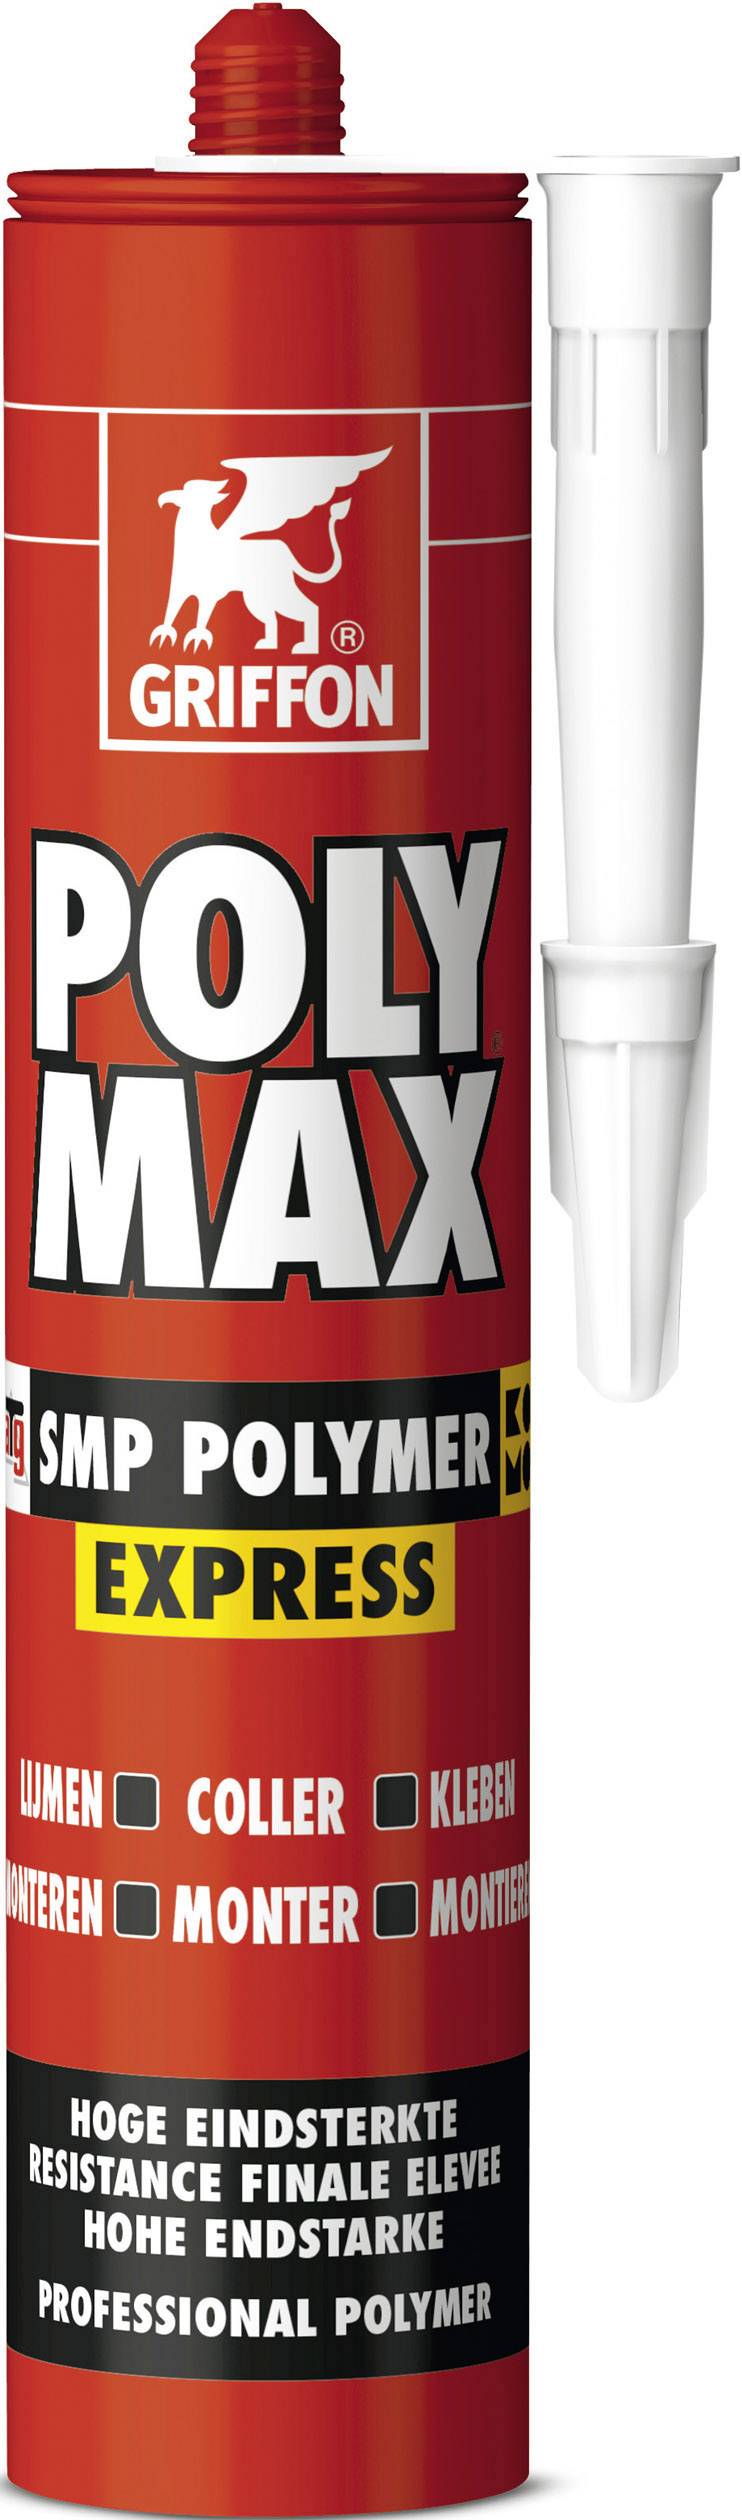 Griffon Poly Max SMP Polymer Express Constructielijm 6306289 435 g |